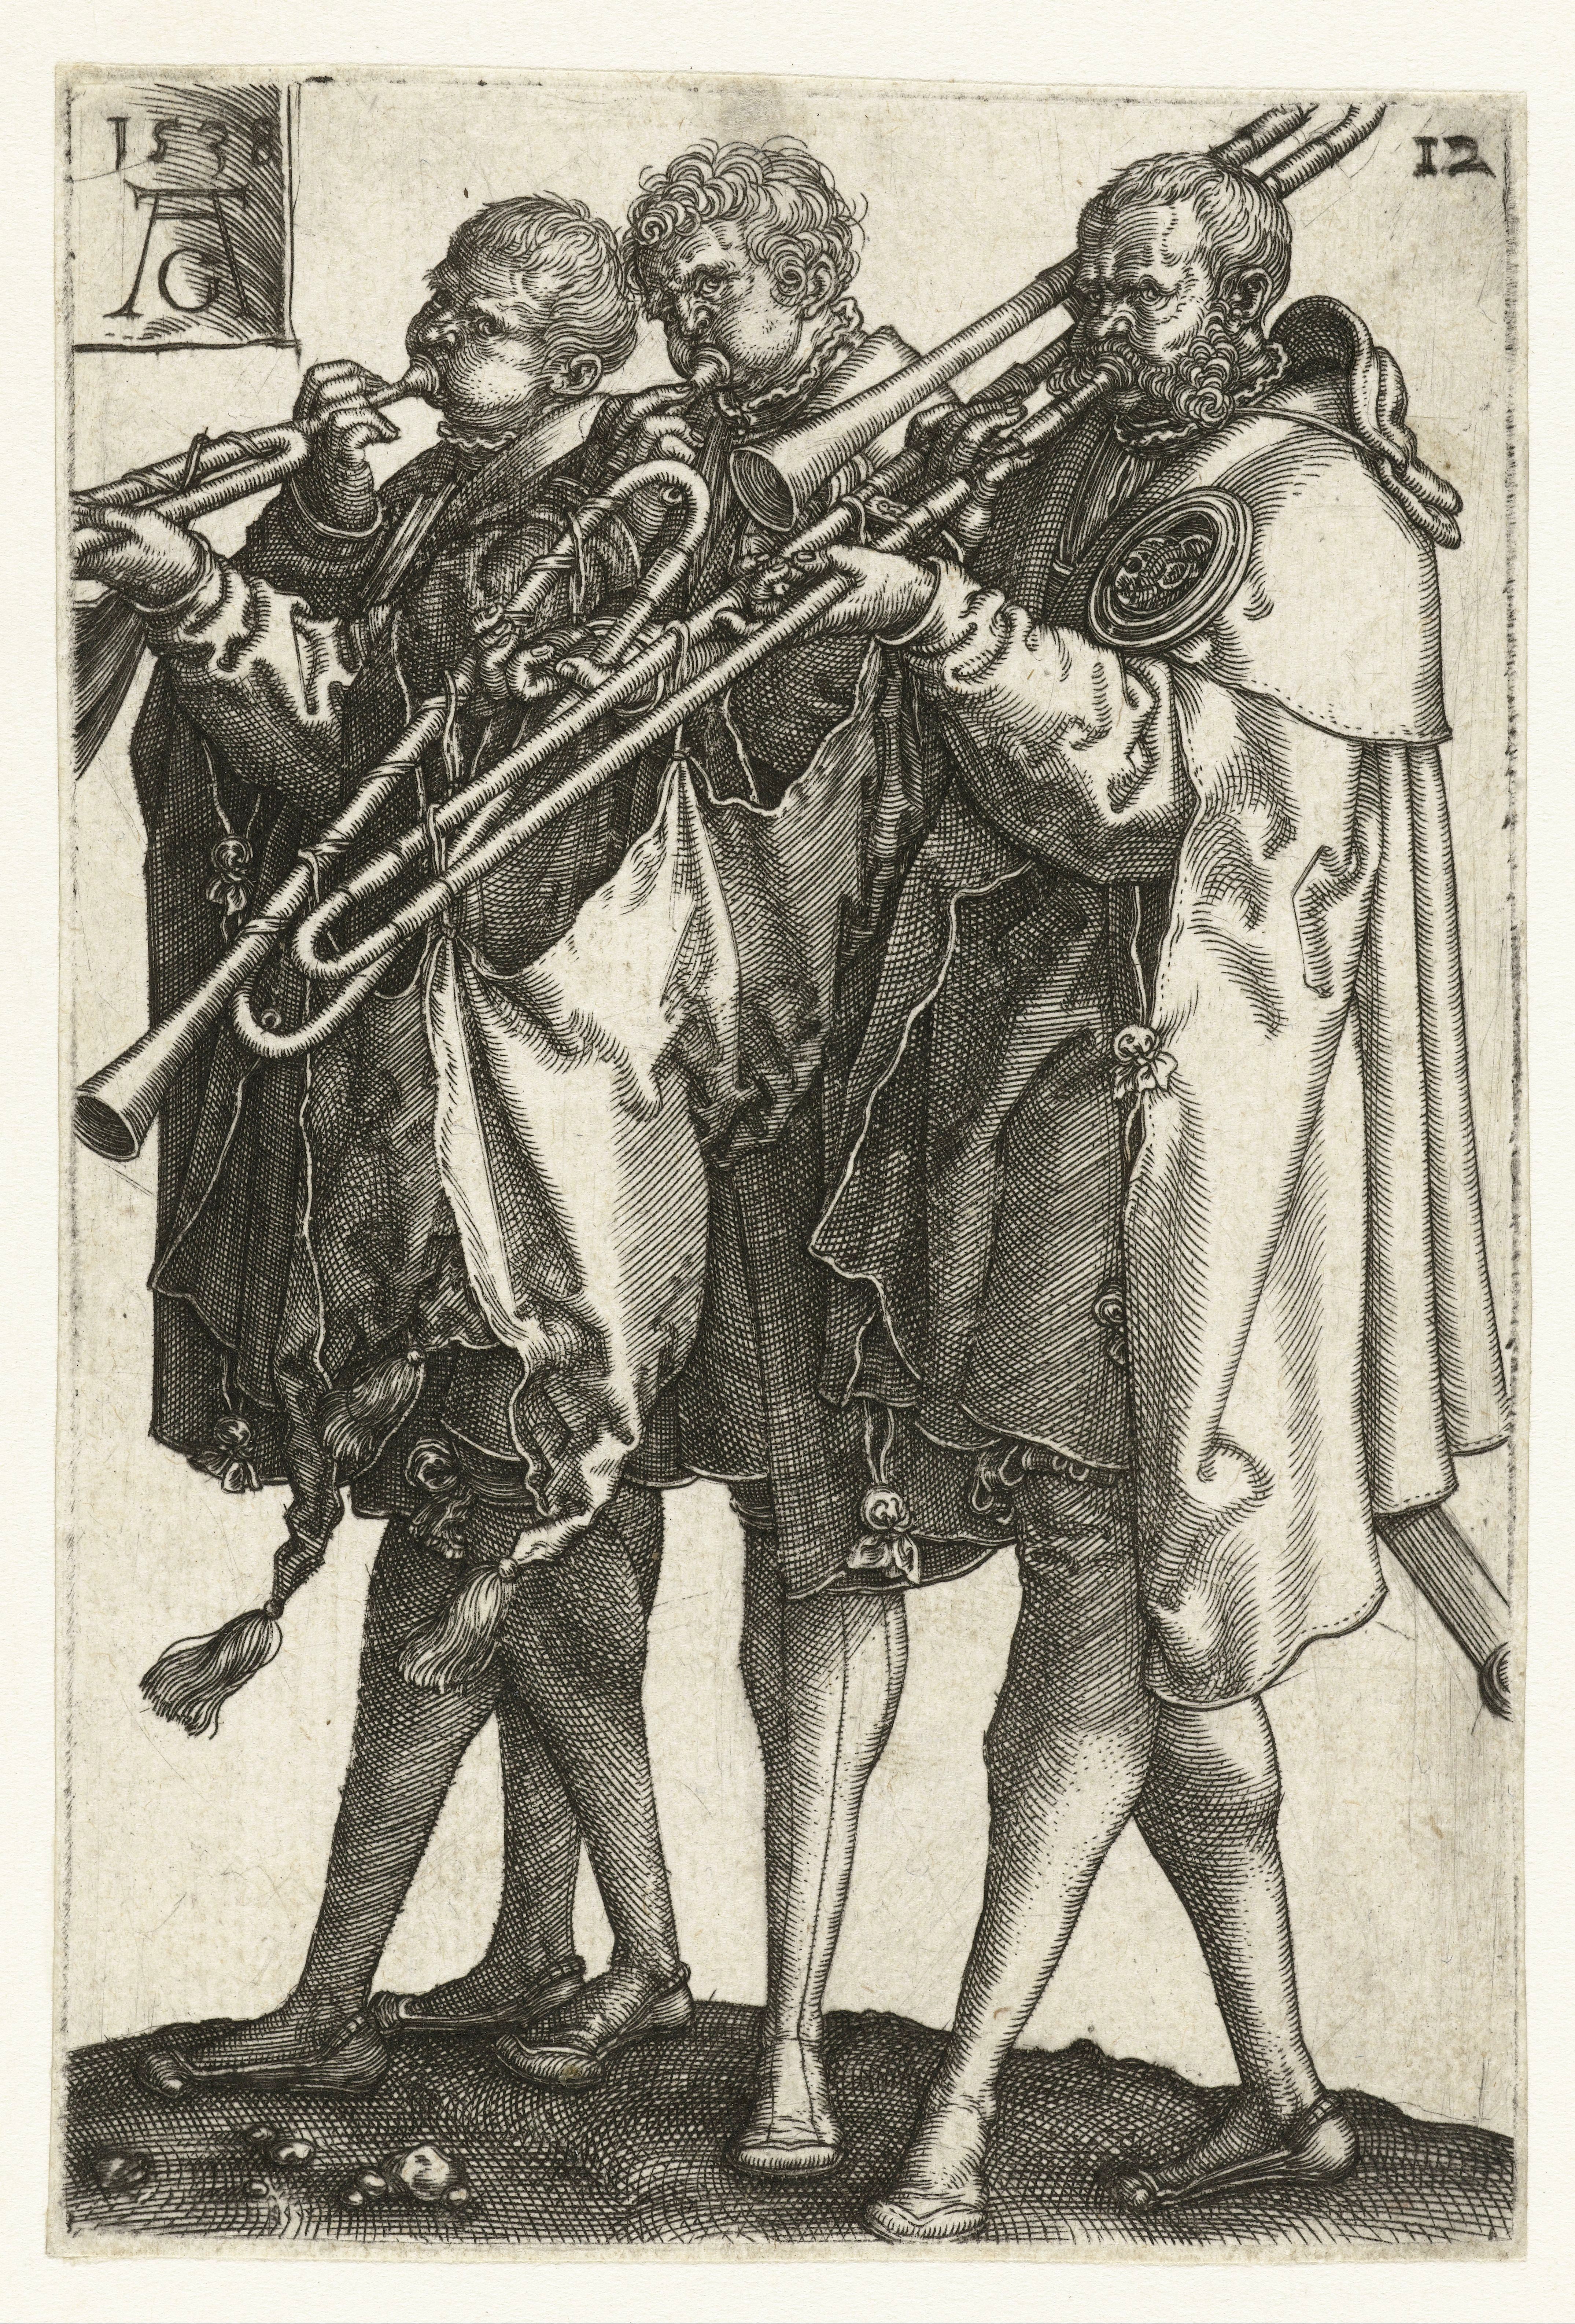 Drie muzikanten, Heinrich Aldegrever, 1538. Image courtesy of the Rijks Studio, Rijksmuseum.